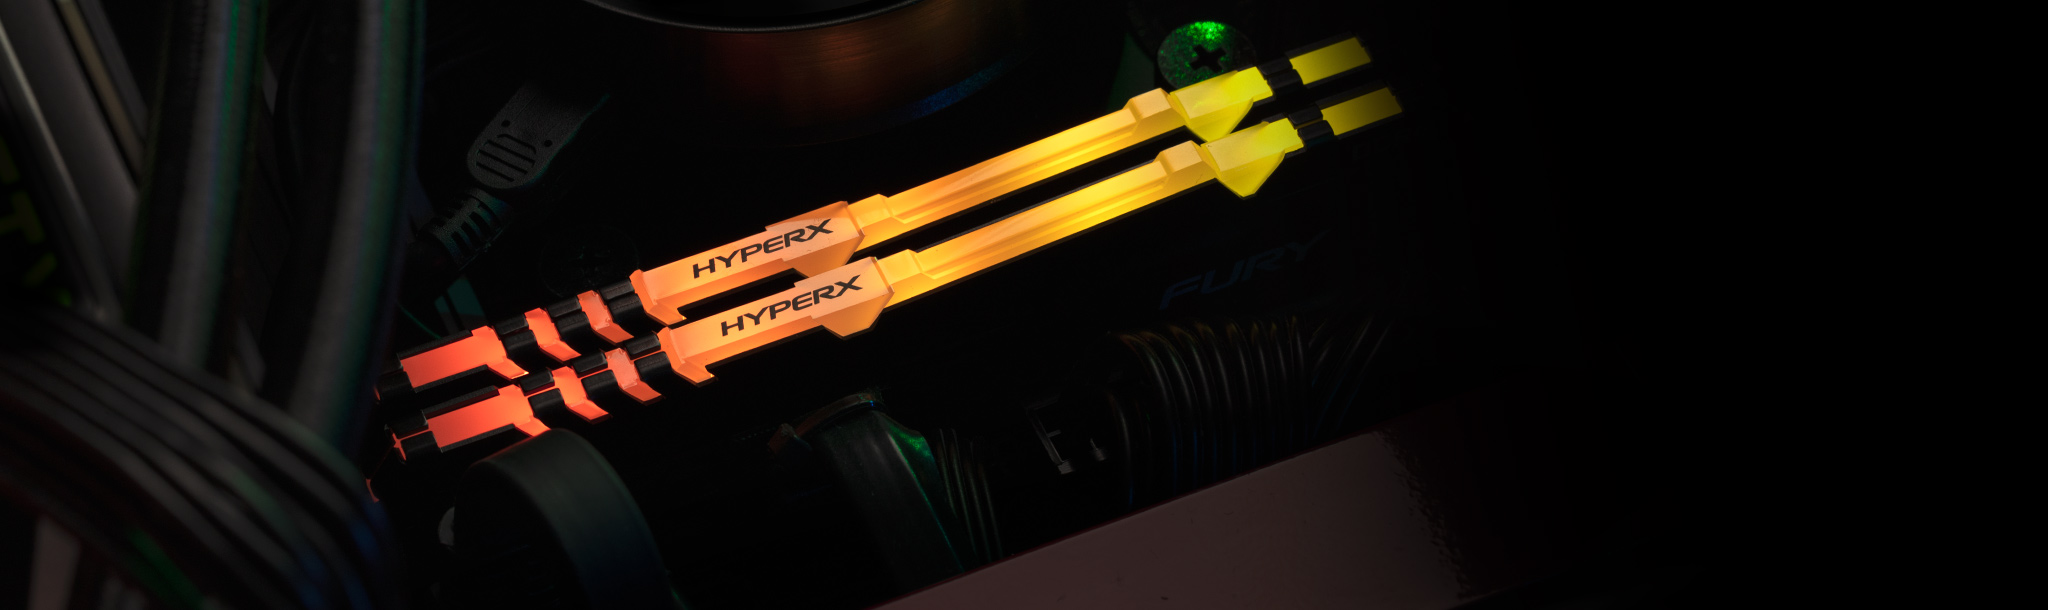 Desktop gaming PC with HyperX RGB Memory inside.